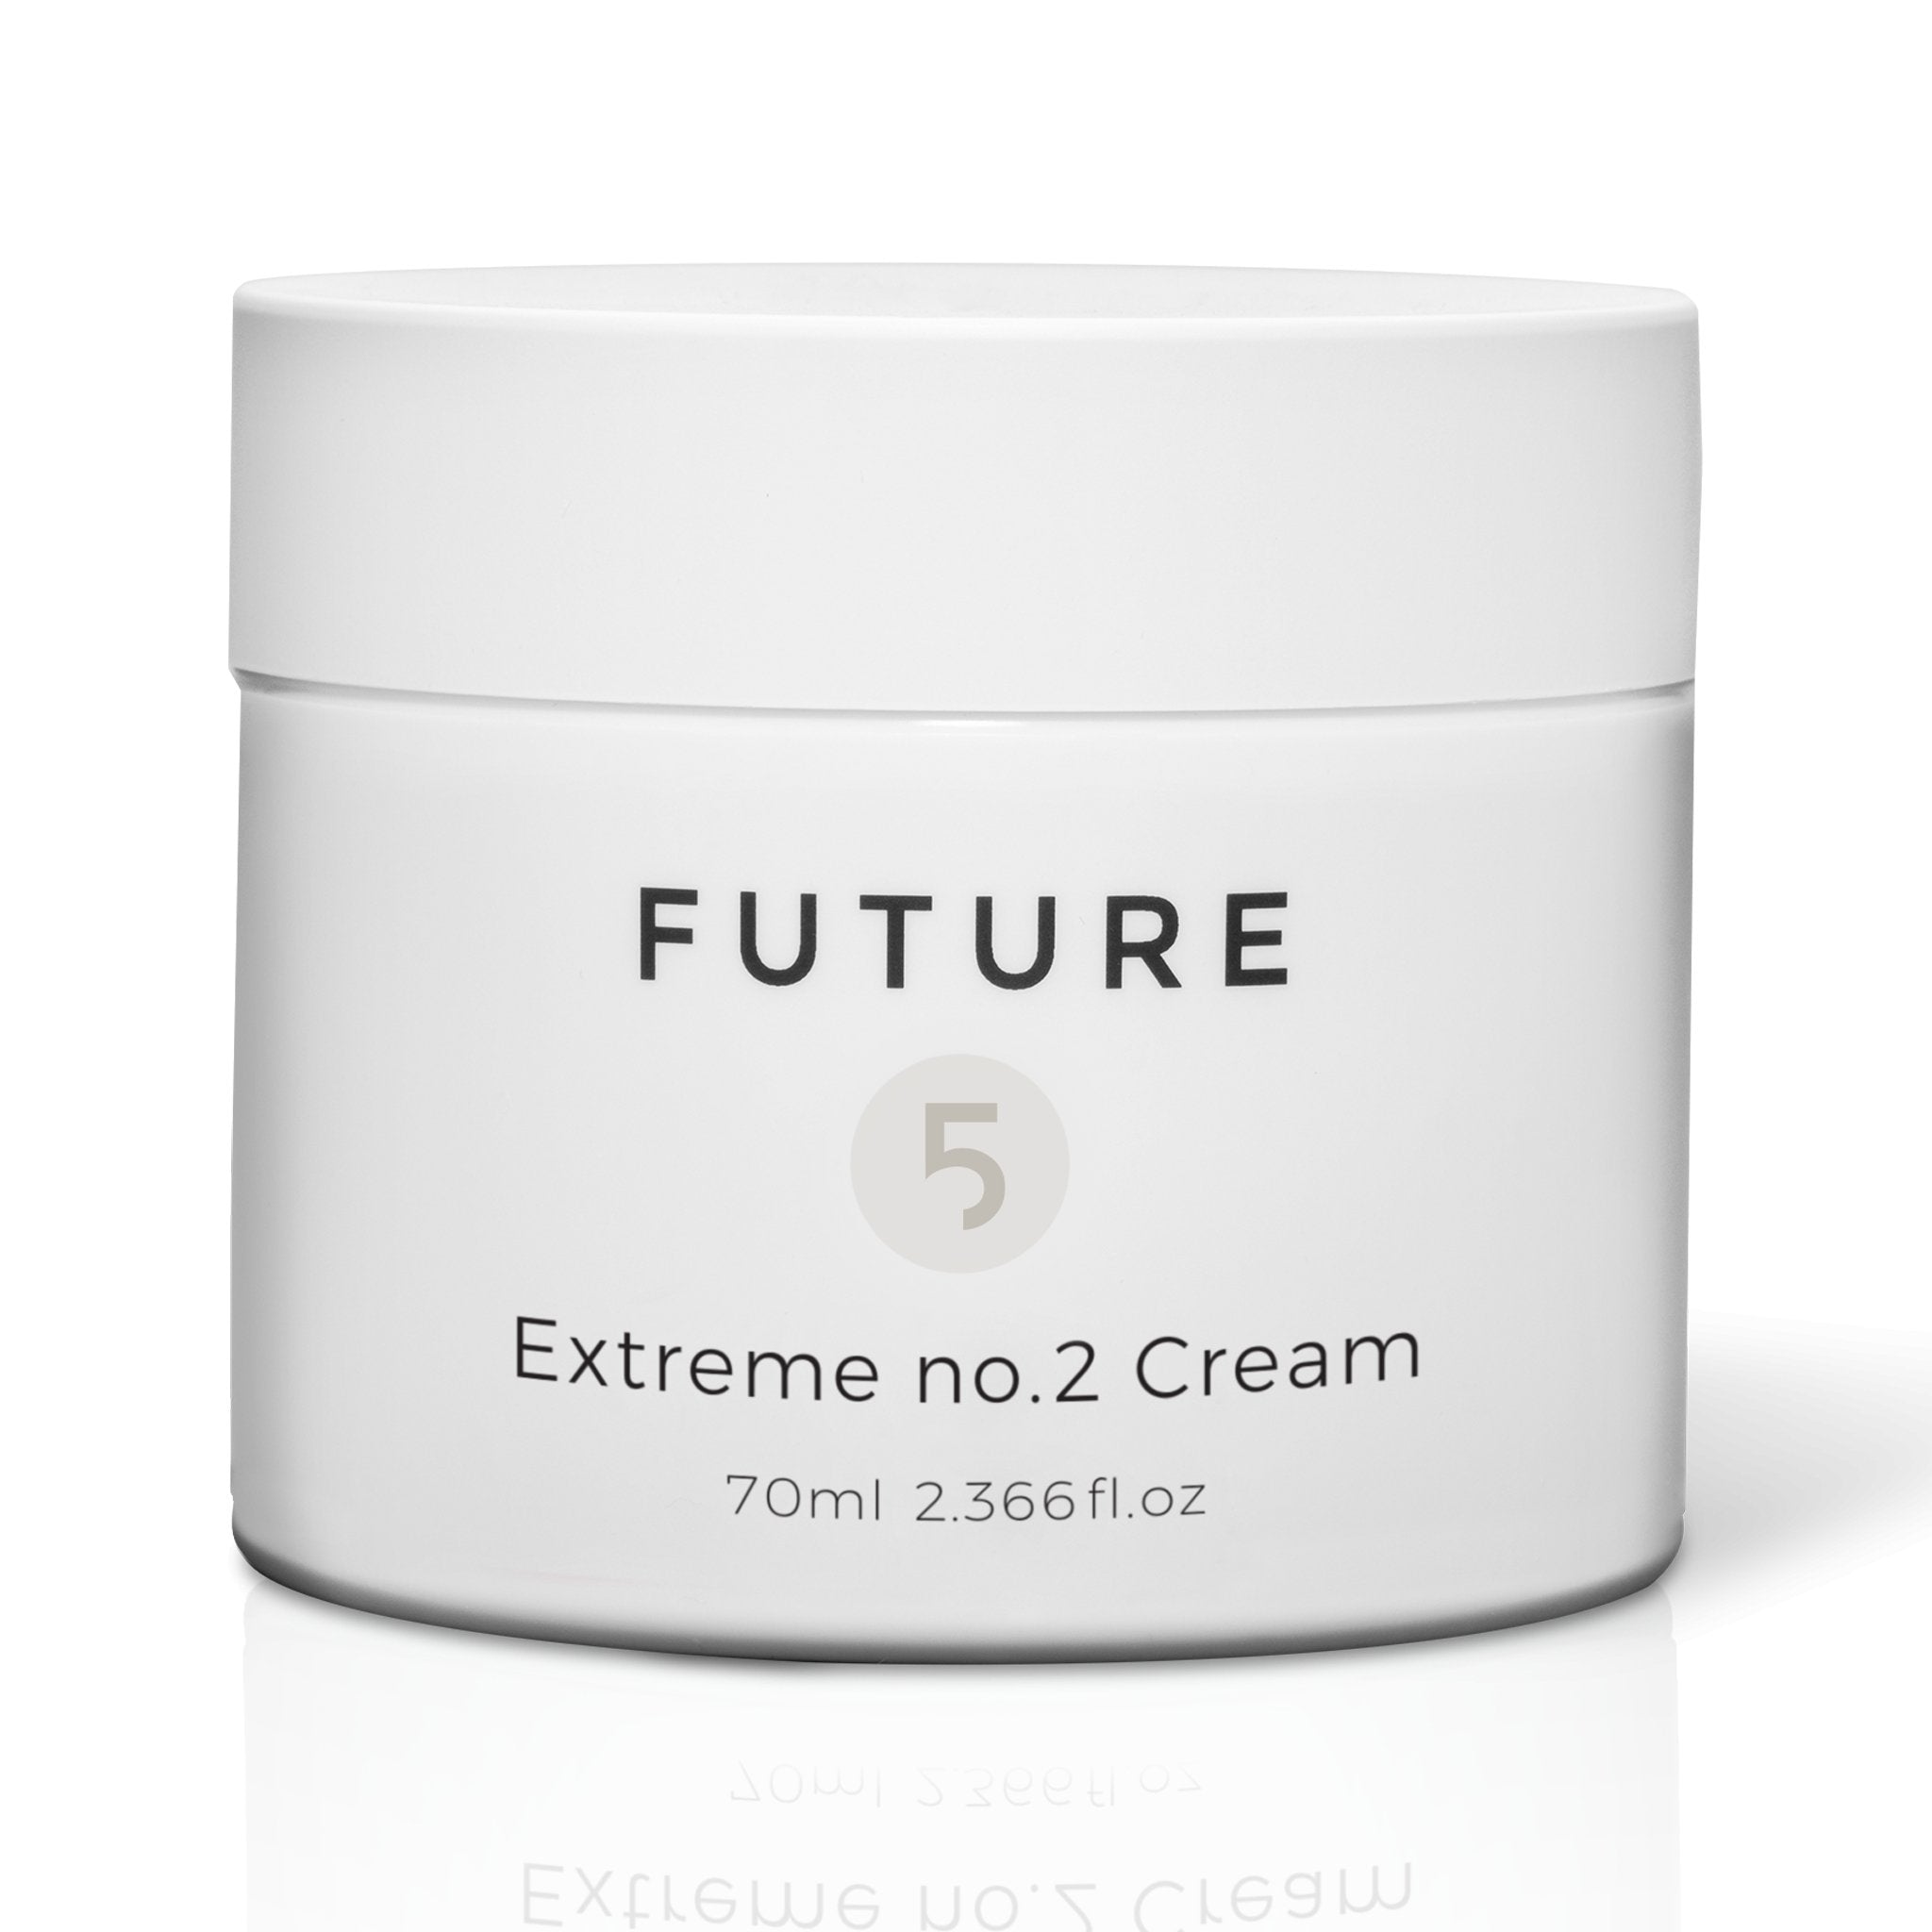 Extreme No. 2 Cream - Future Cosmetics The 5 Elements